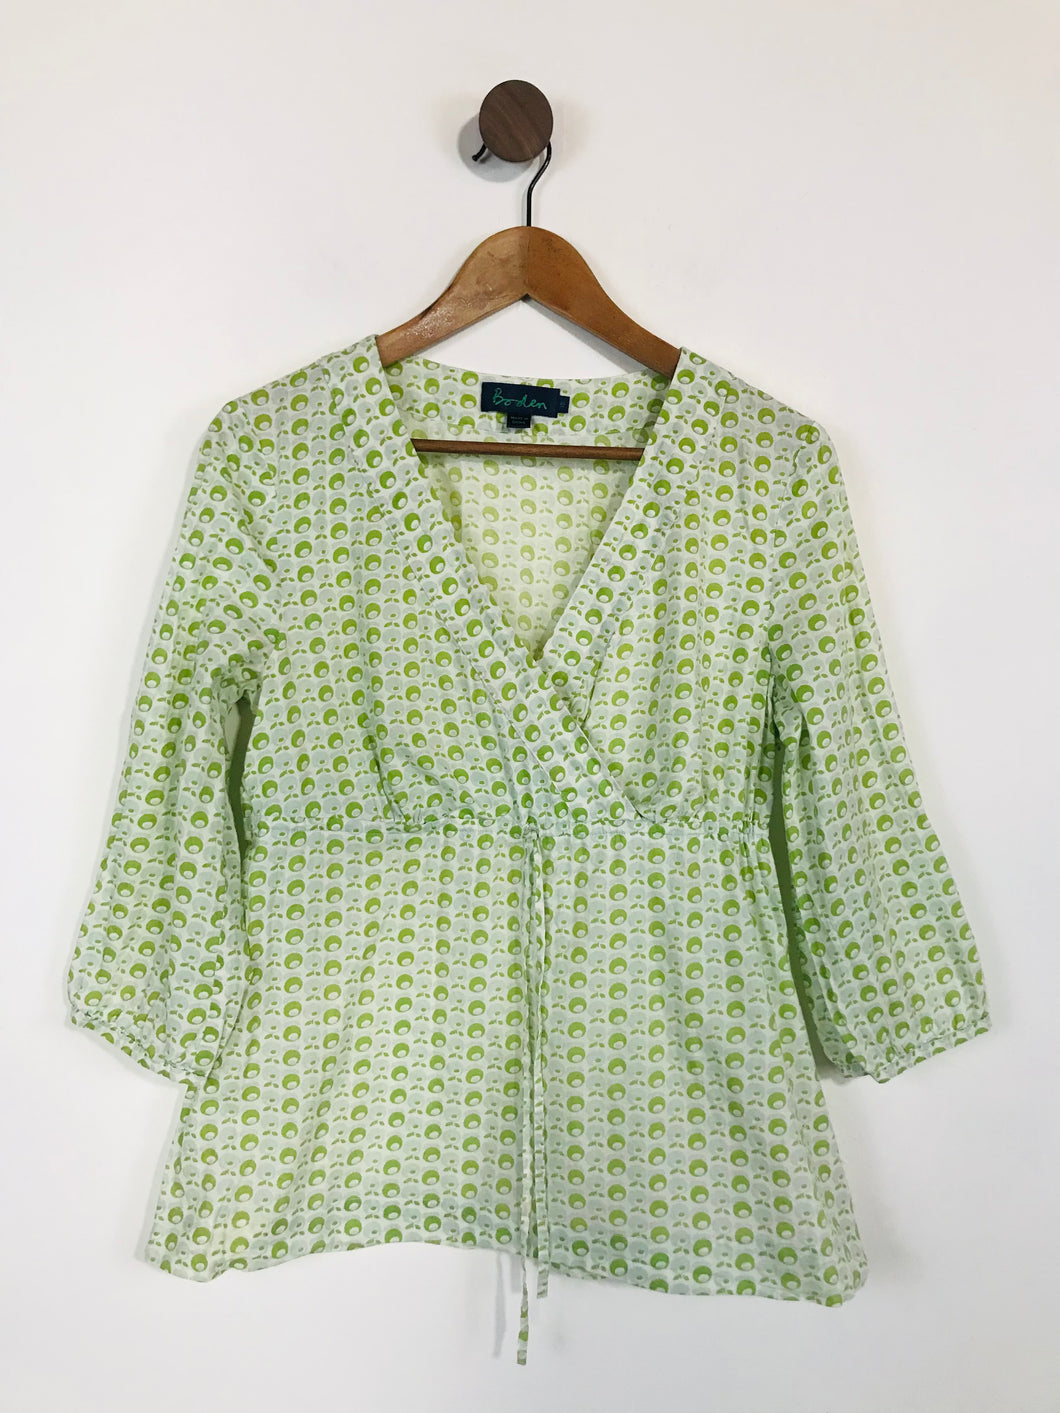 Boden Women's Patterned Blouse | UK12 | Green